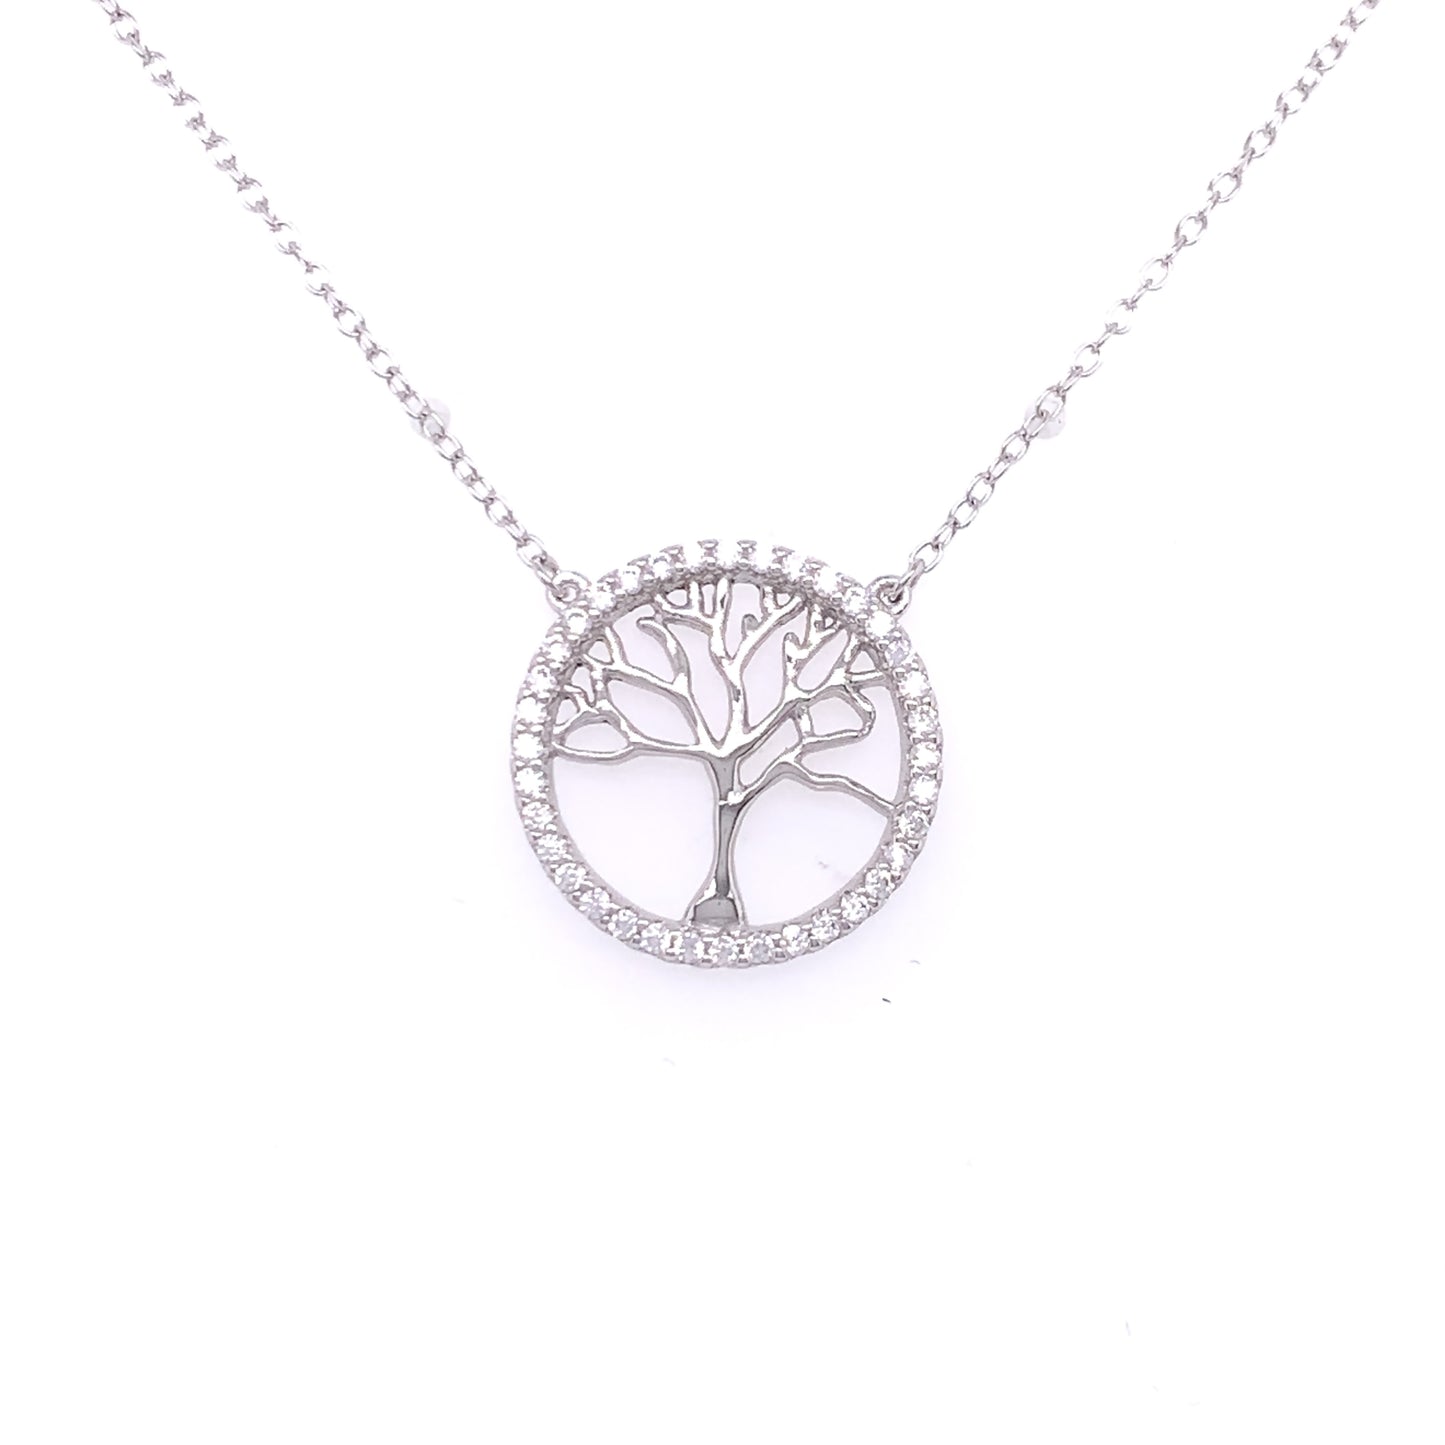 Sterling Silver CZ Bezel Tree Of Life Necklace GL1299